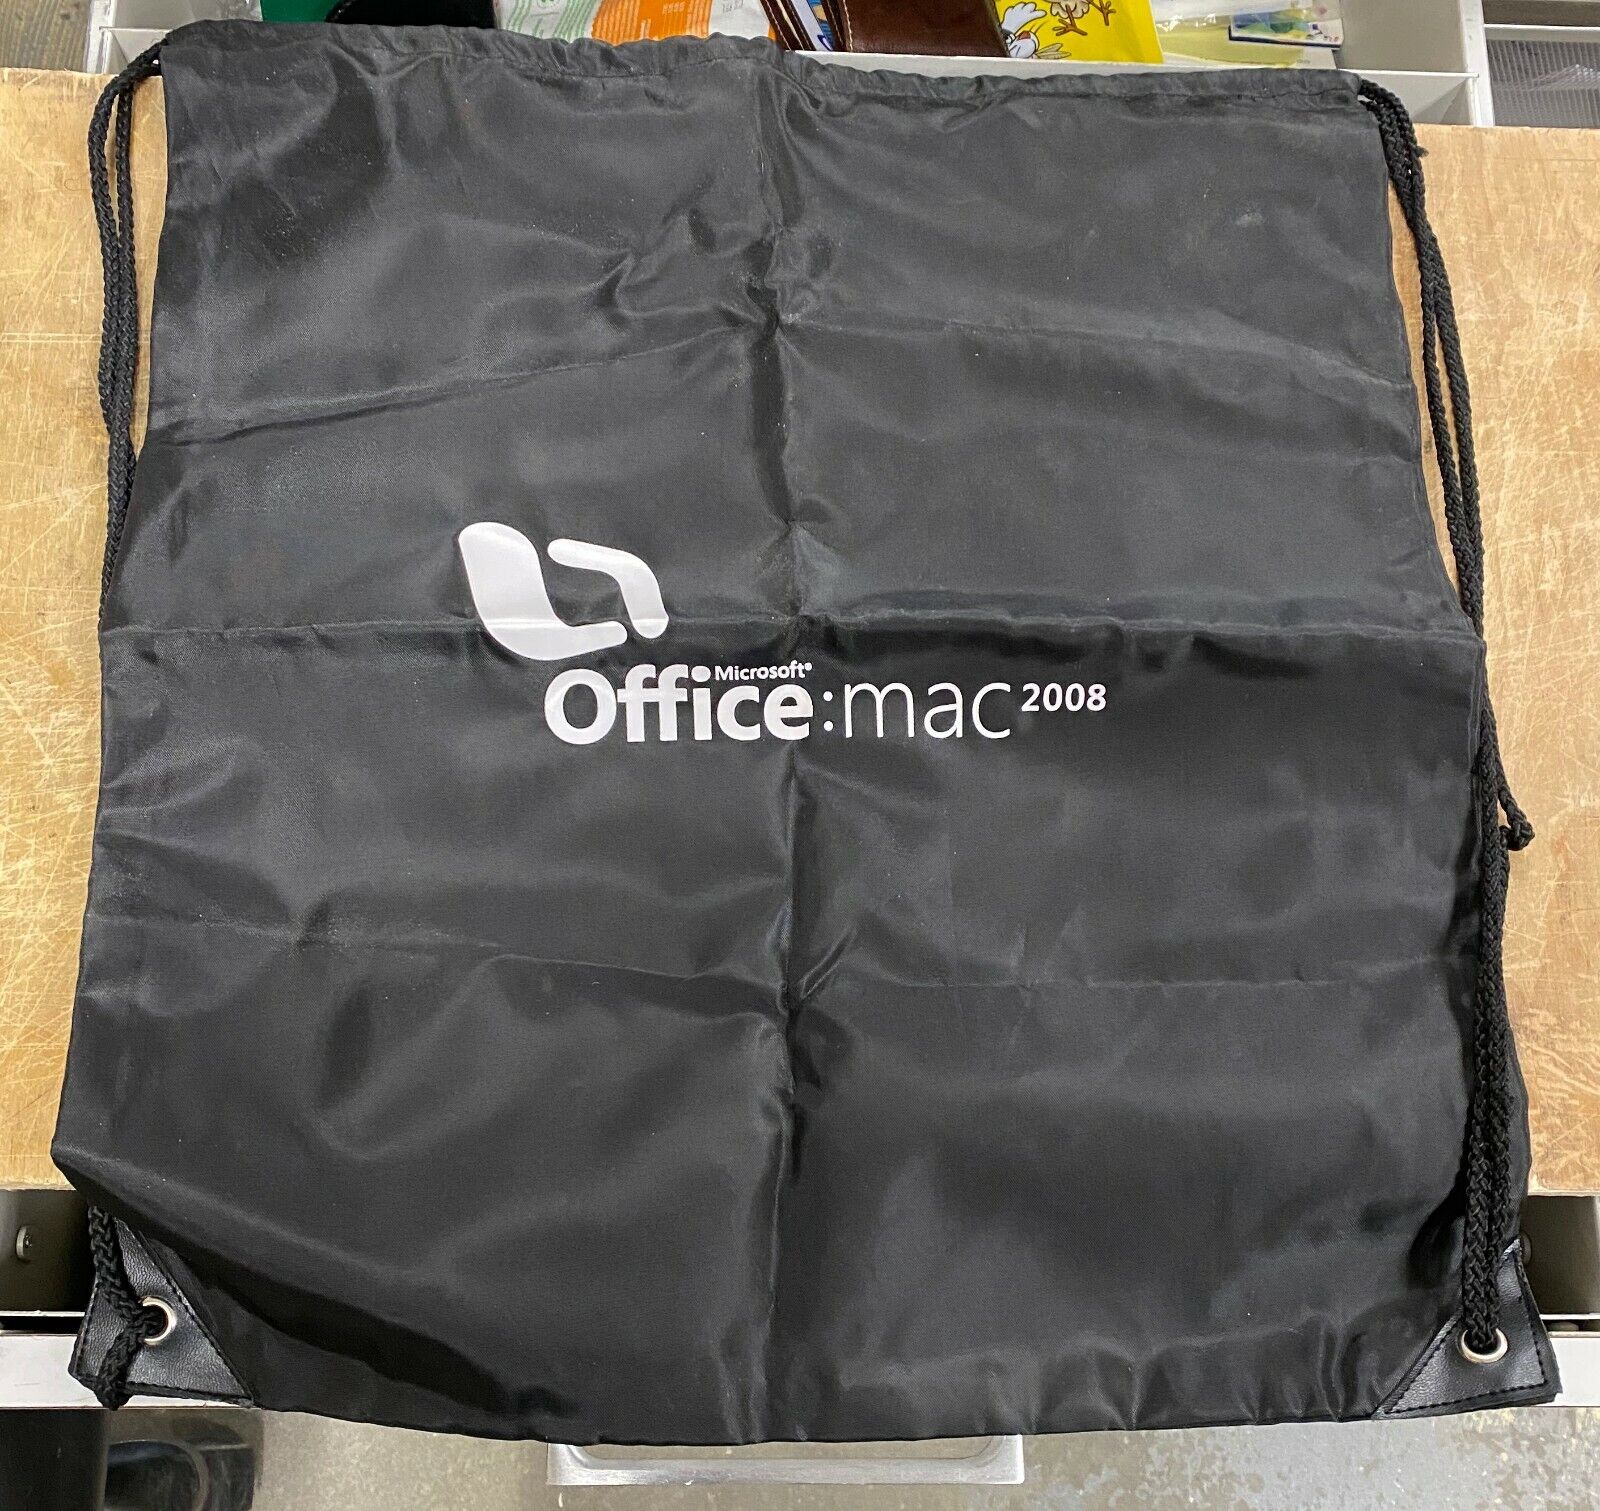 Microsoft Office 2008 Mac Promotional Drawstring Backpack